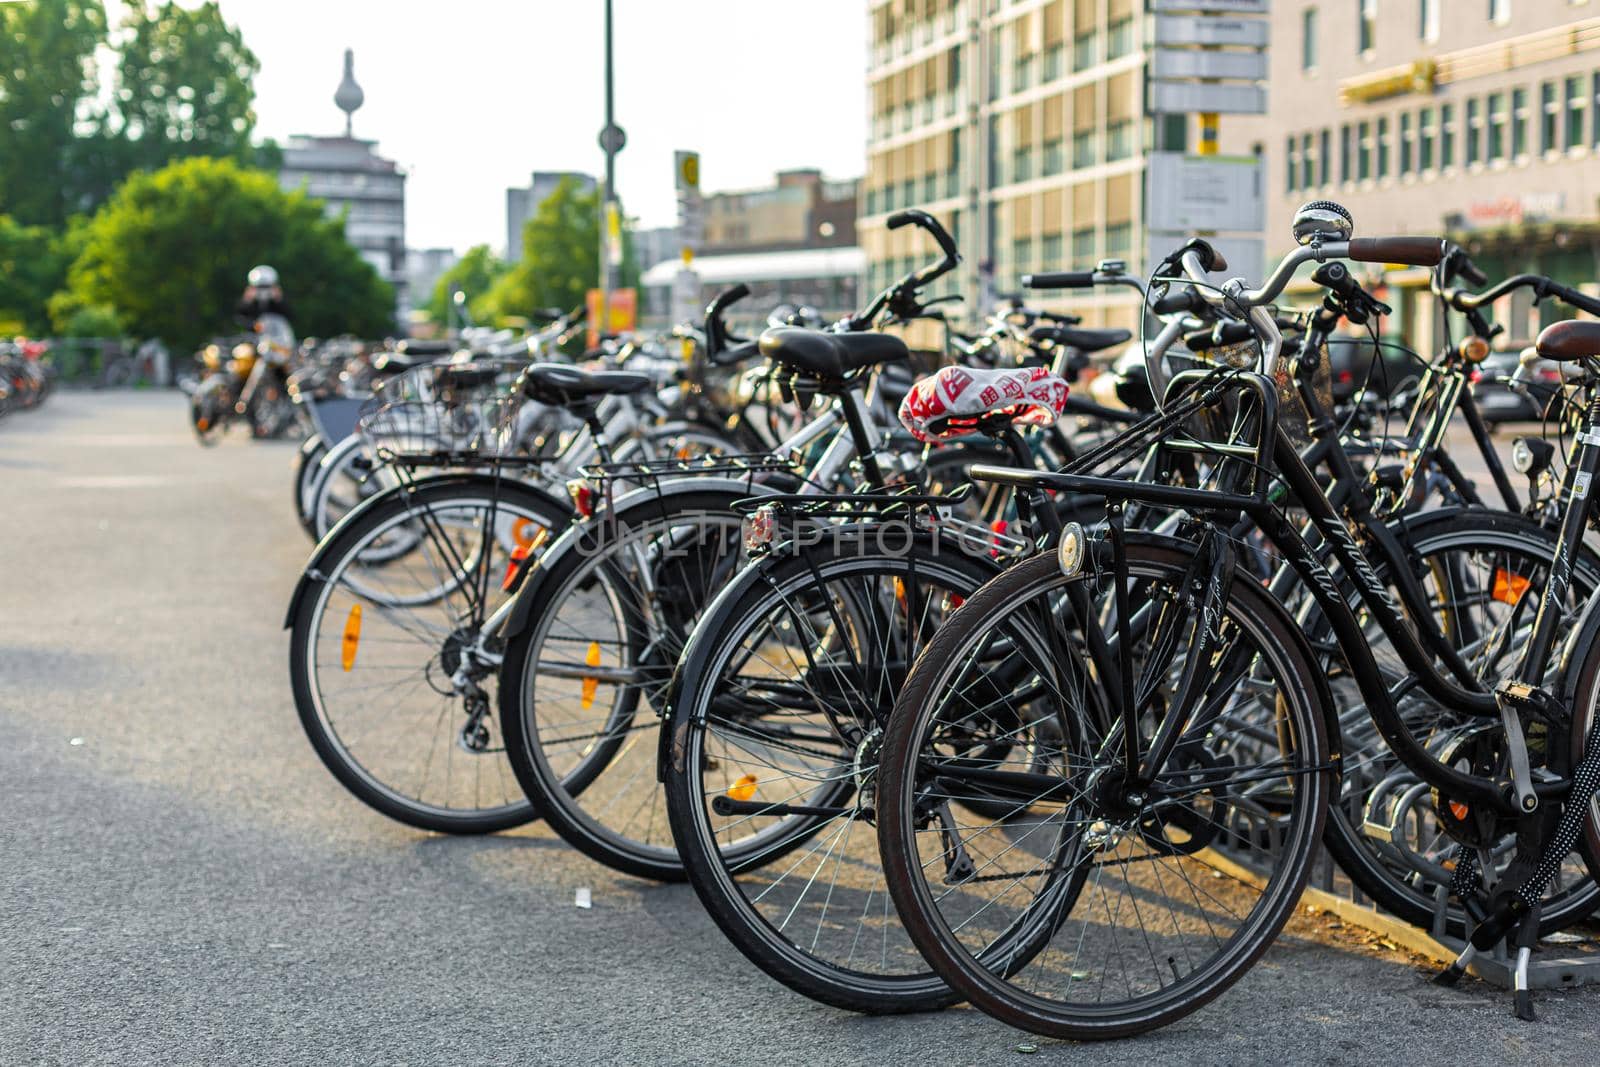 Bicycle parking in Europe. Popular urban transport. Berlin, Germany - 05.17.2019